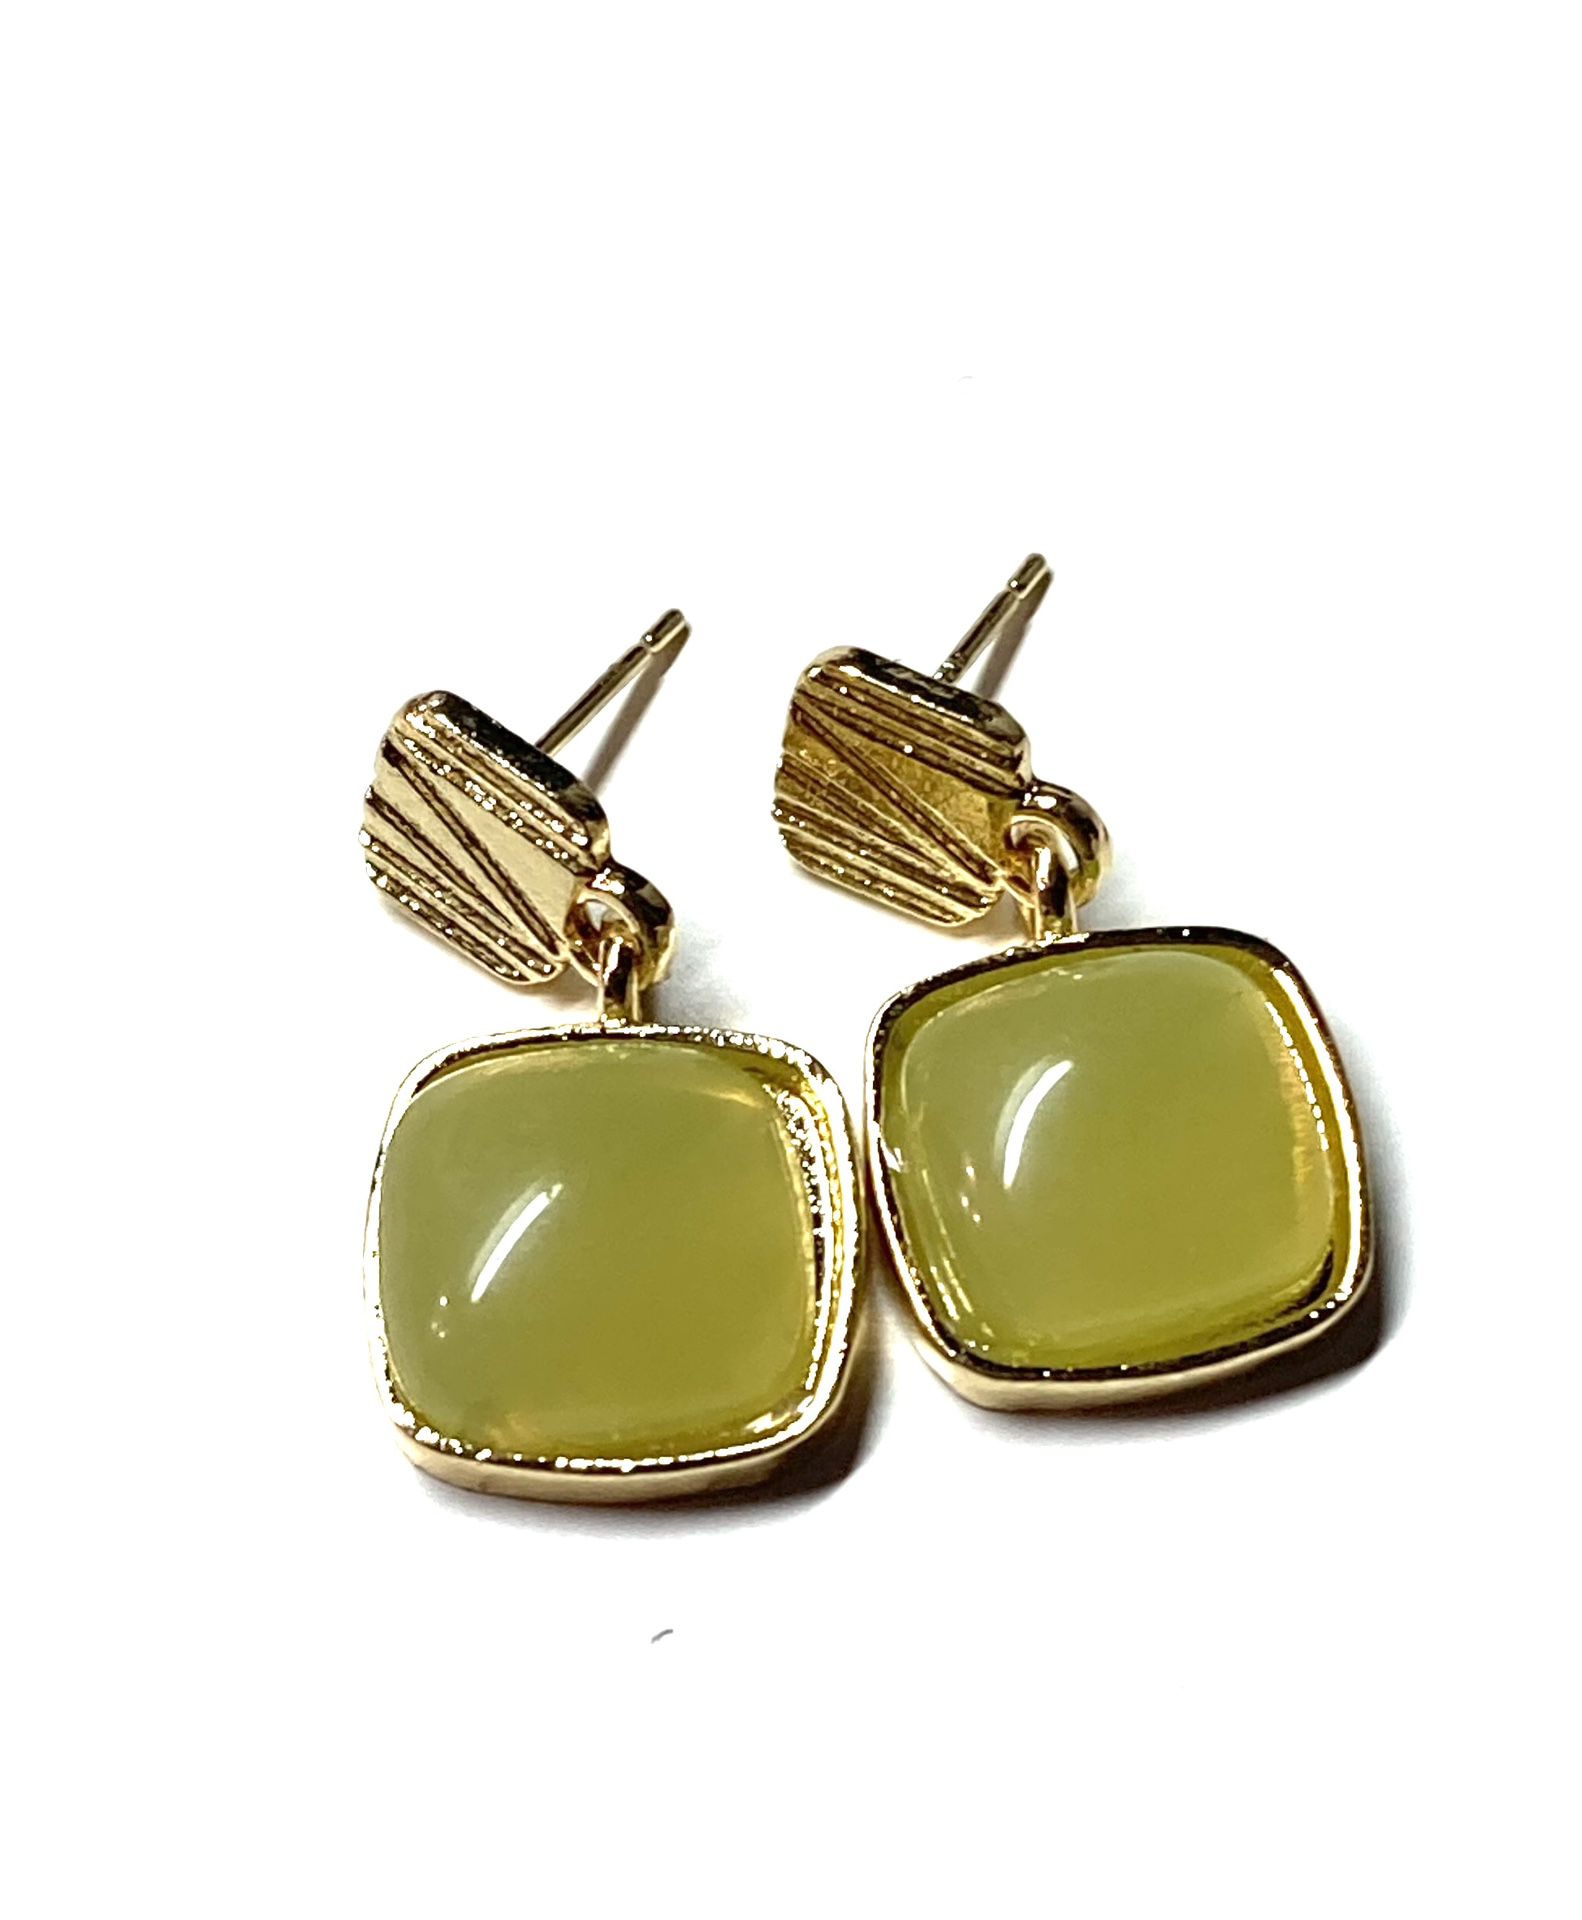 Gold Plate Jade Jadeite Square Earring Earrings 